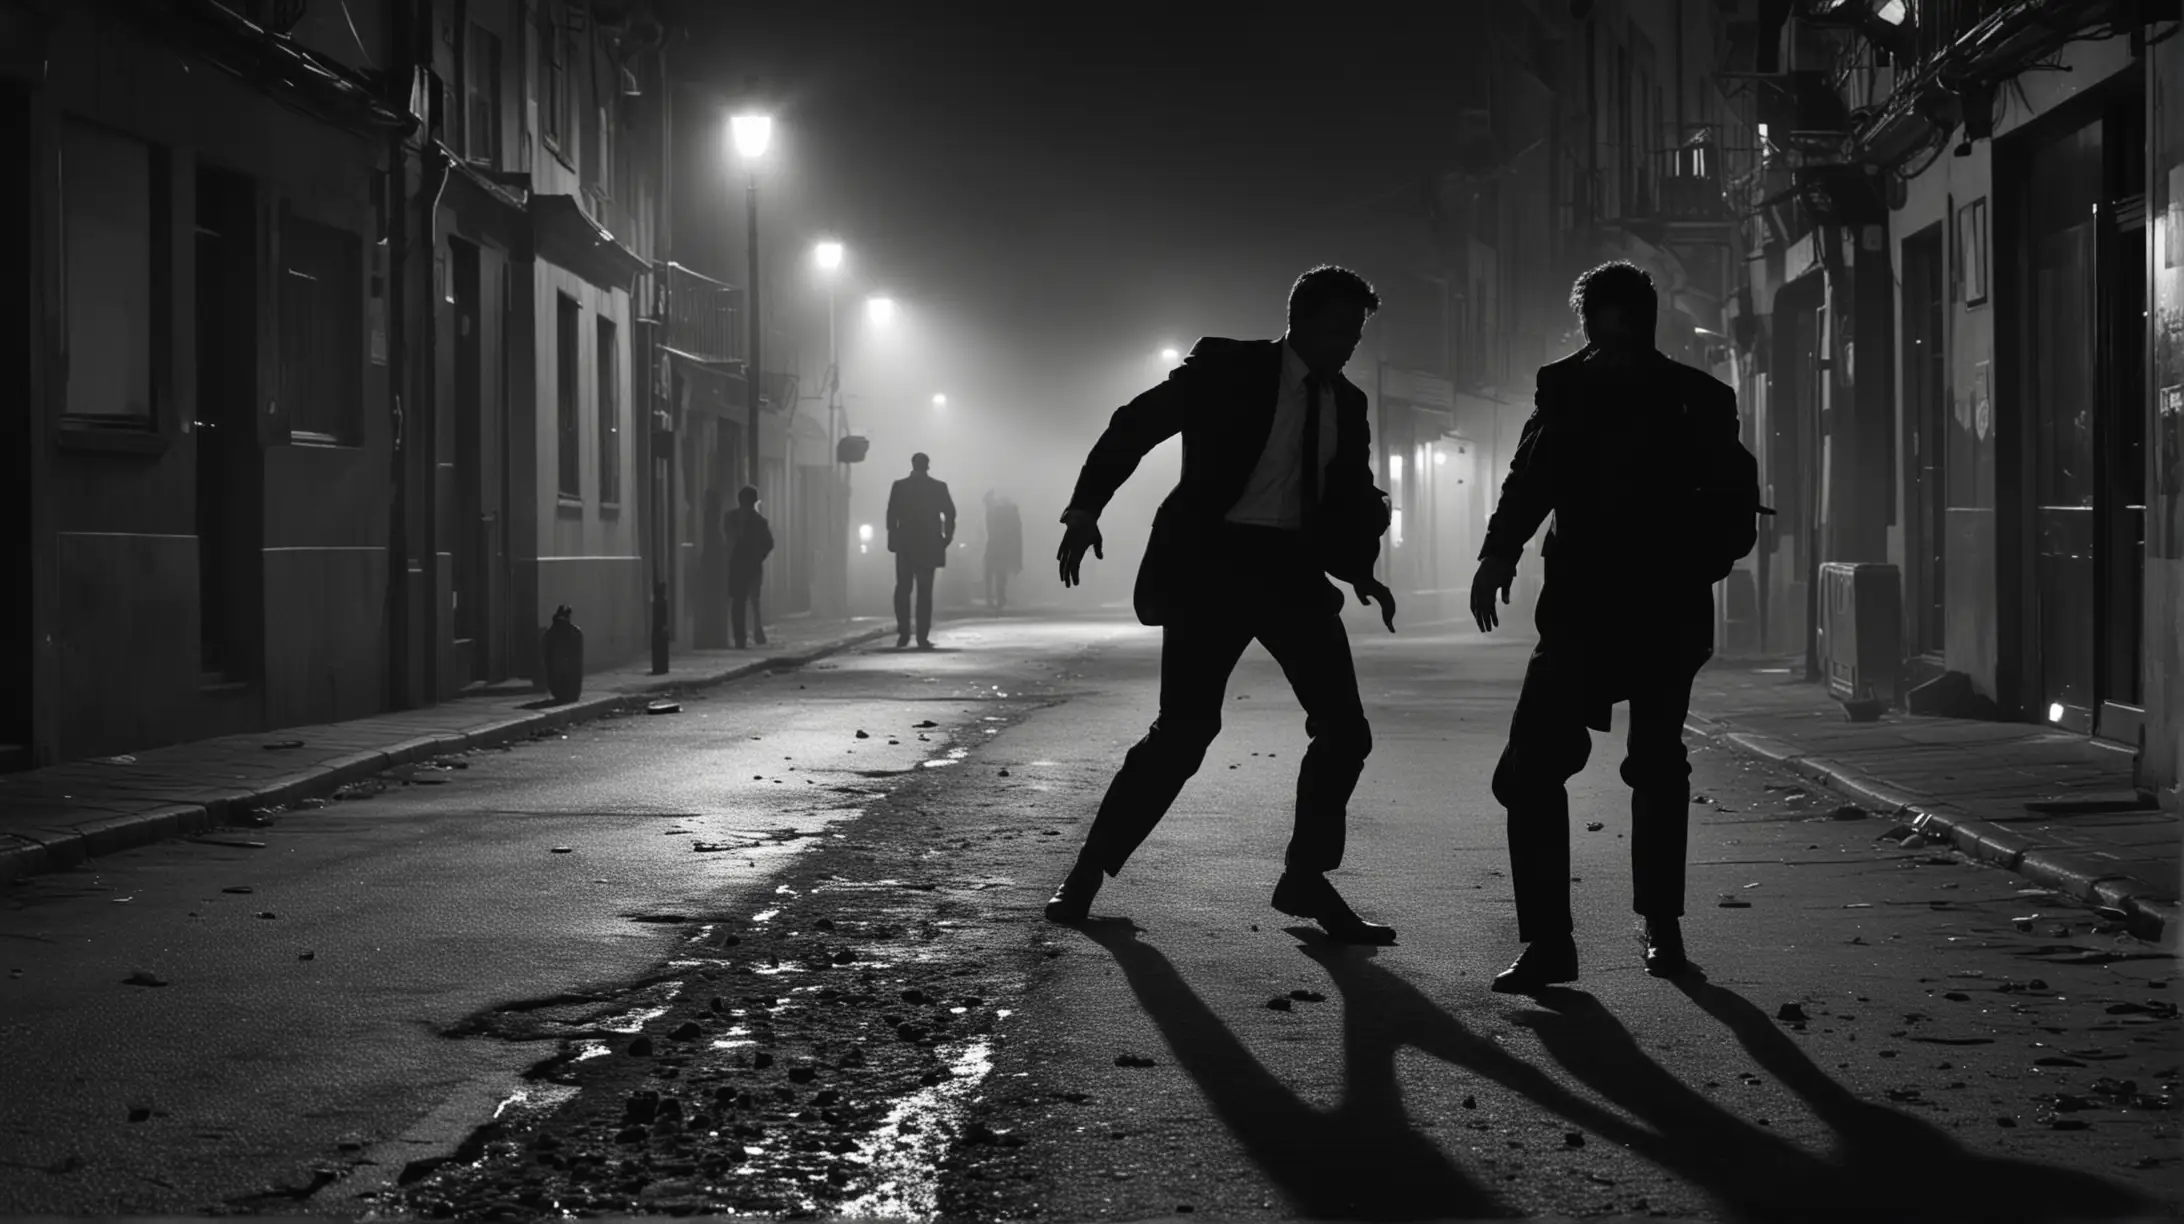 Intense Street Fight Dark Suit Man Defends Against Attack in Dimly Lit Alley